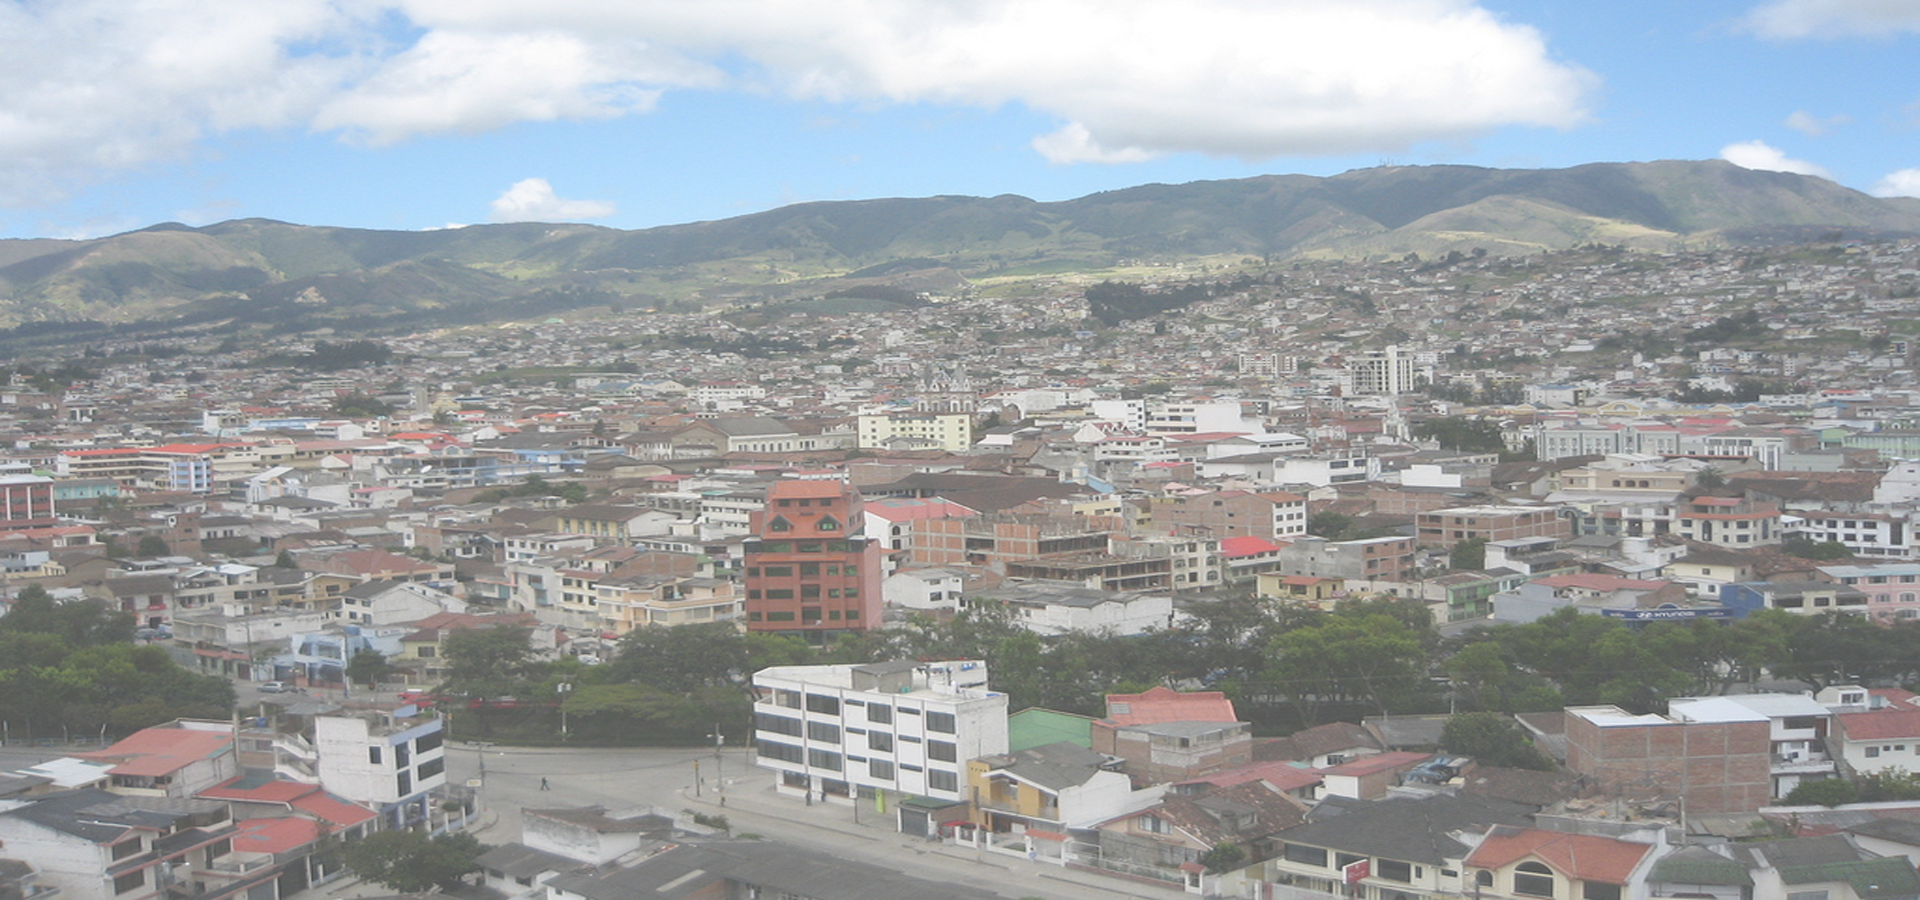 <b>Loja, Ecuador</b>